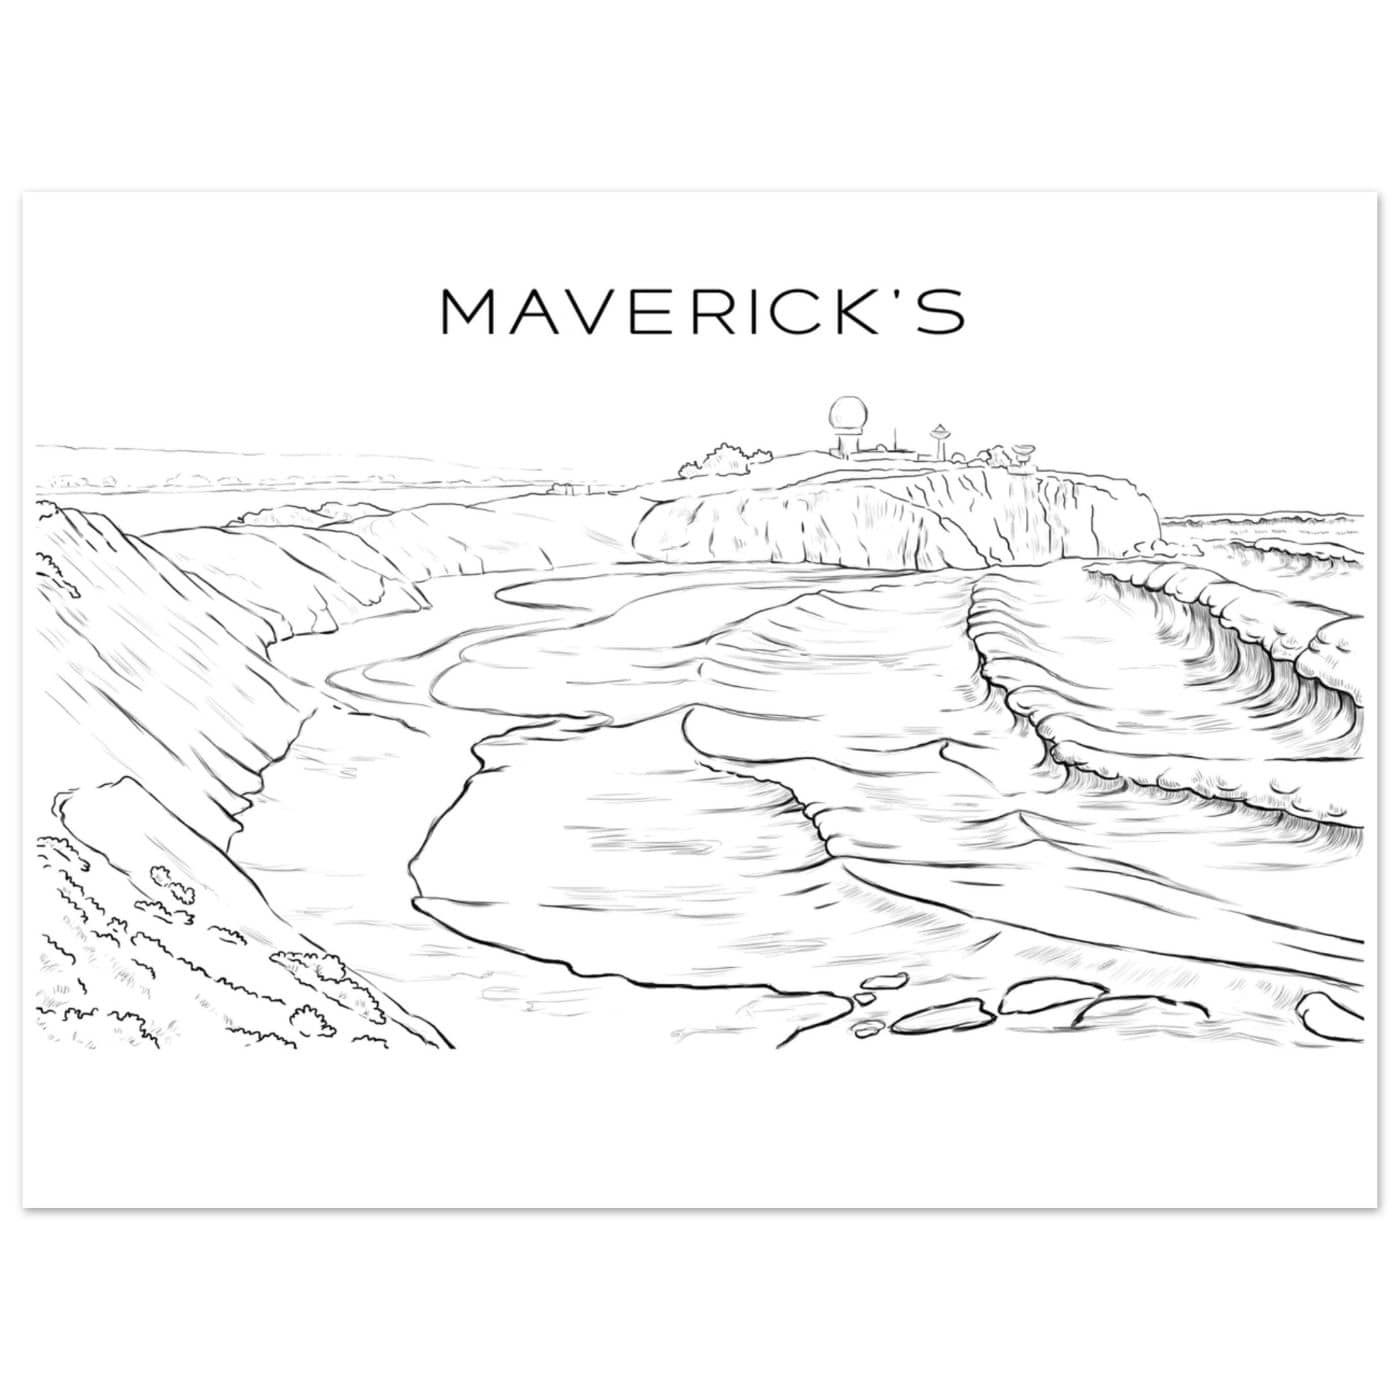 Maverick's 2.0 - Black & White